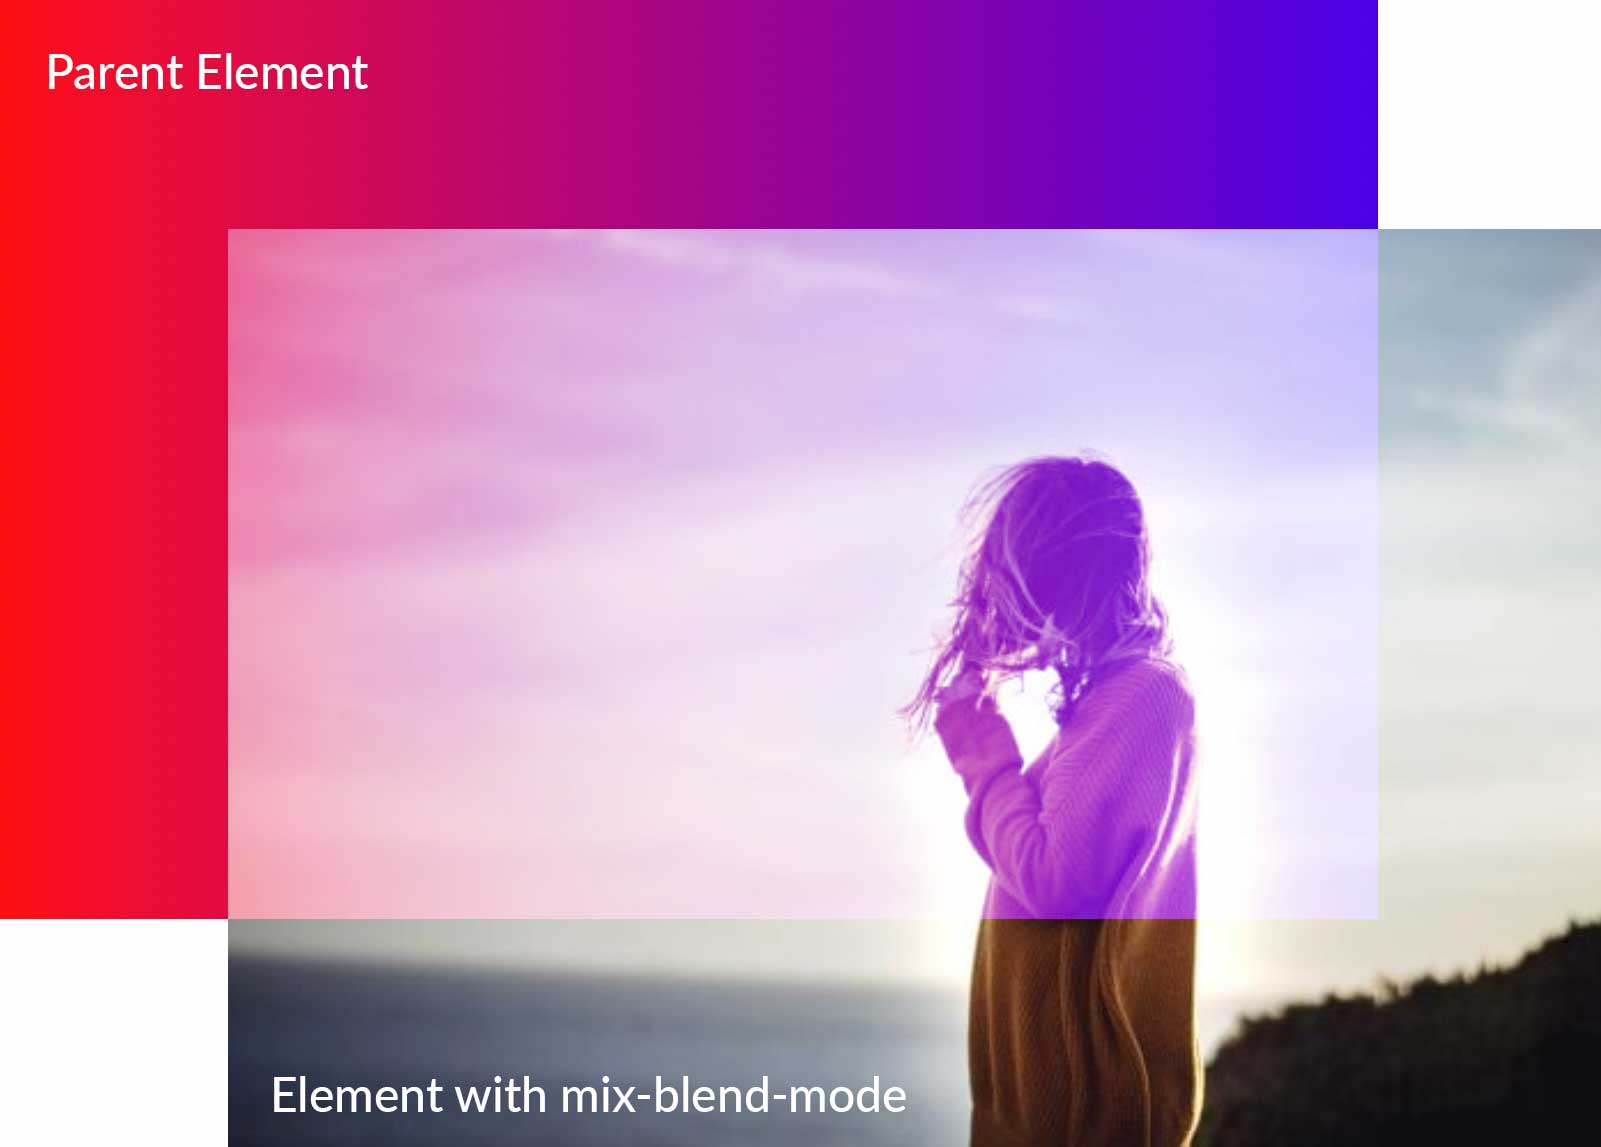 Mix blend mode example